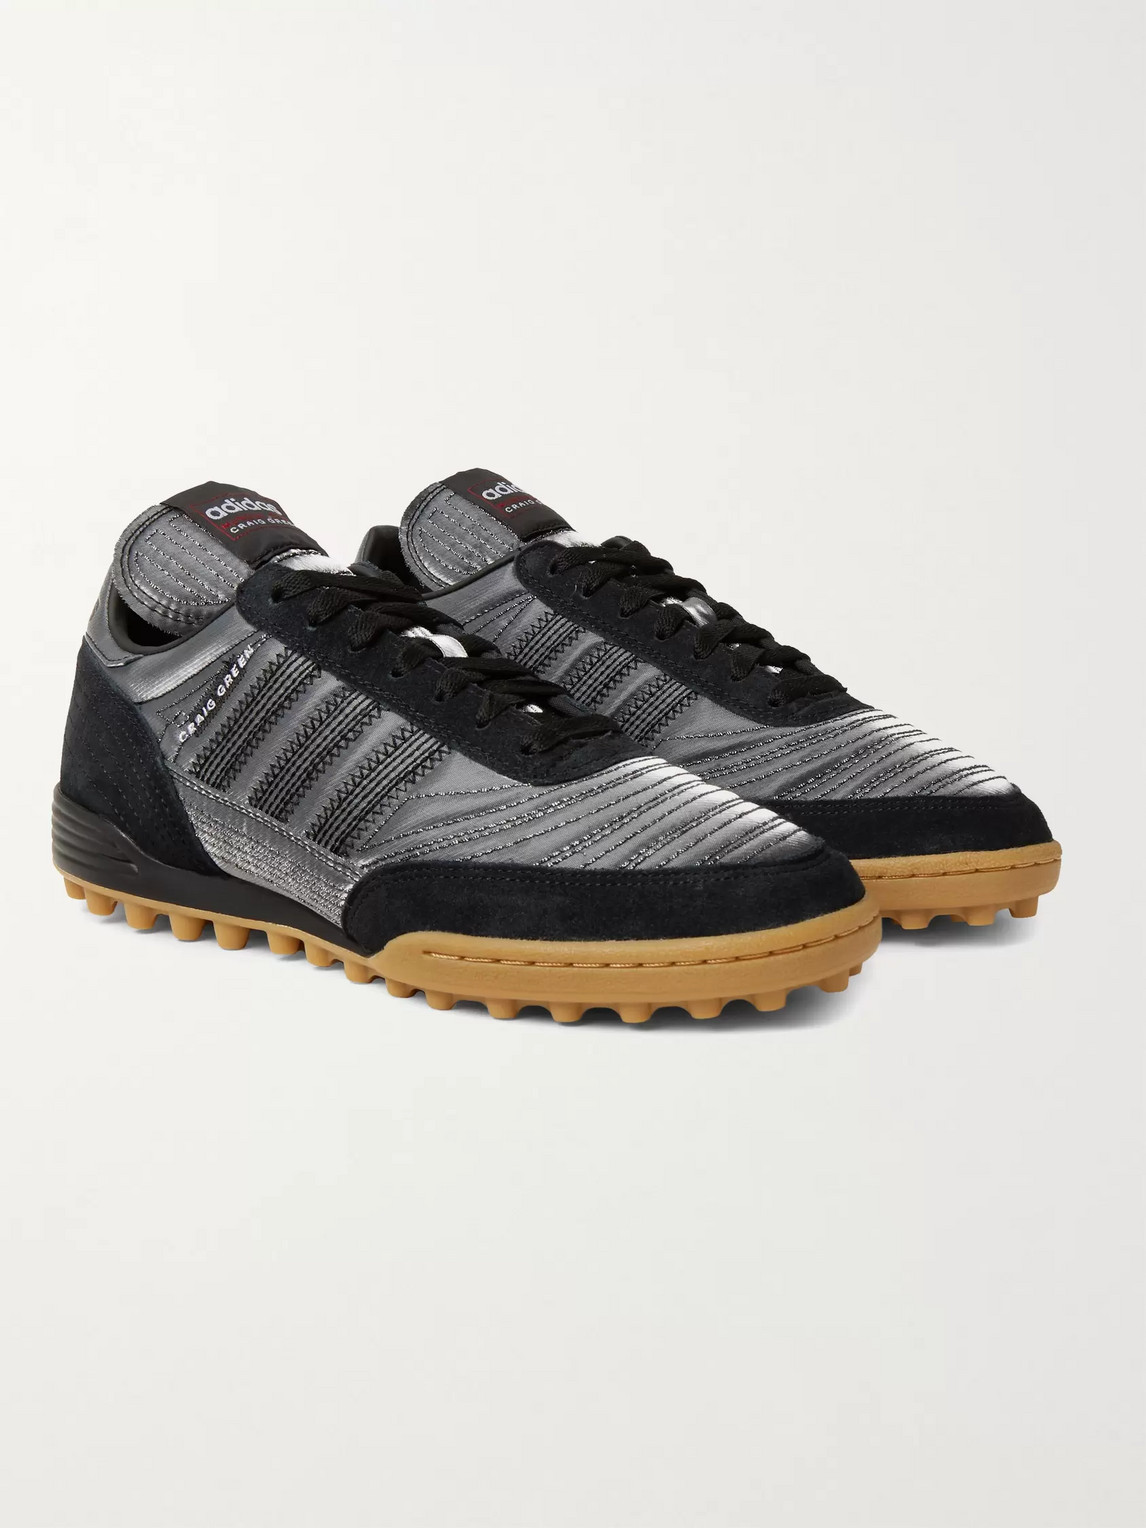 Adidas Consortium Craig Green Kontuur Iii Suede And Metallic Canvas Trainers In Black